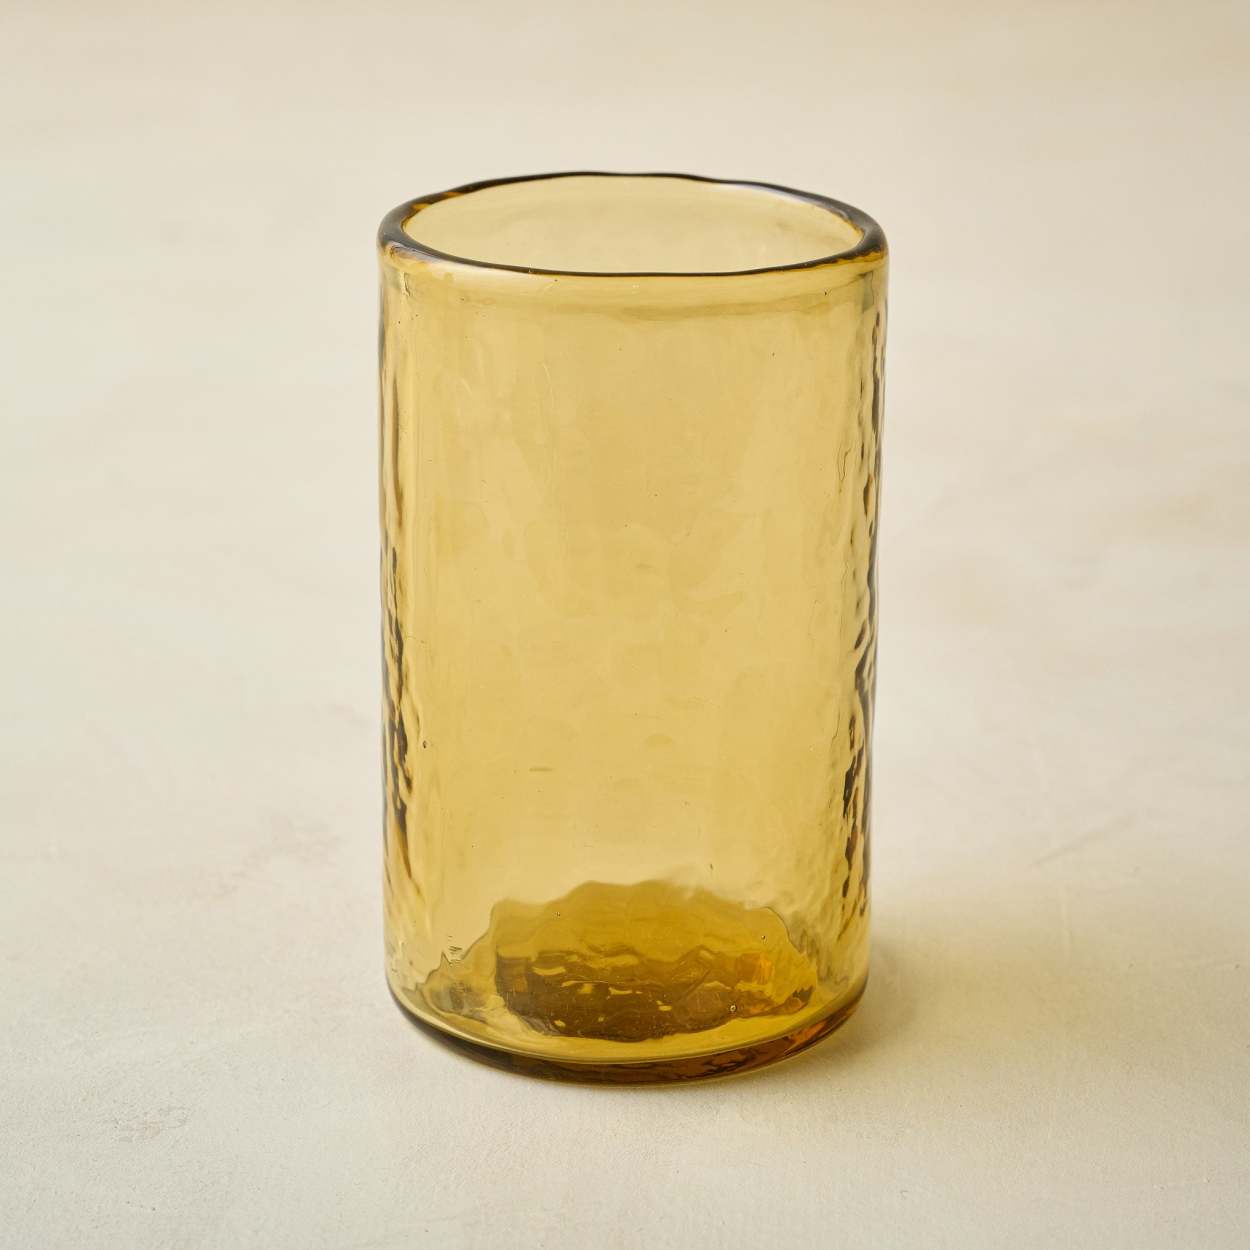 TEXTURED RIM GLASS TUMBLER - Gold